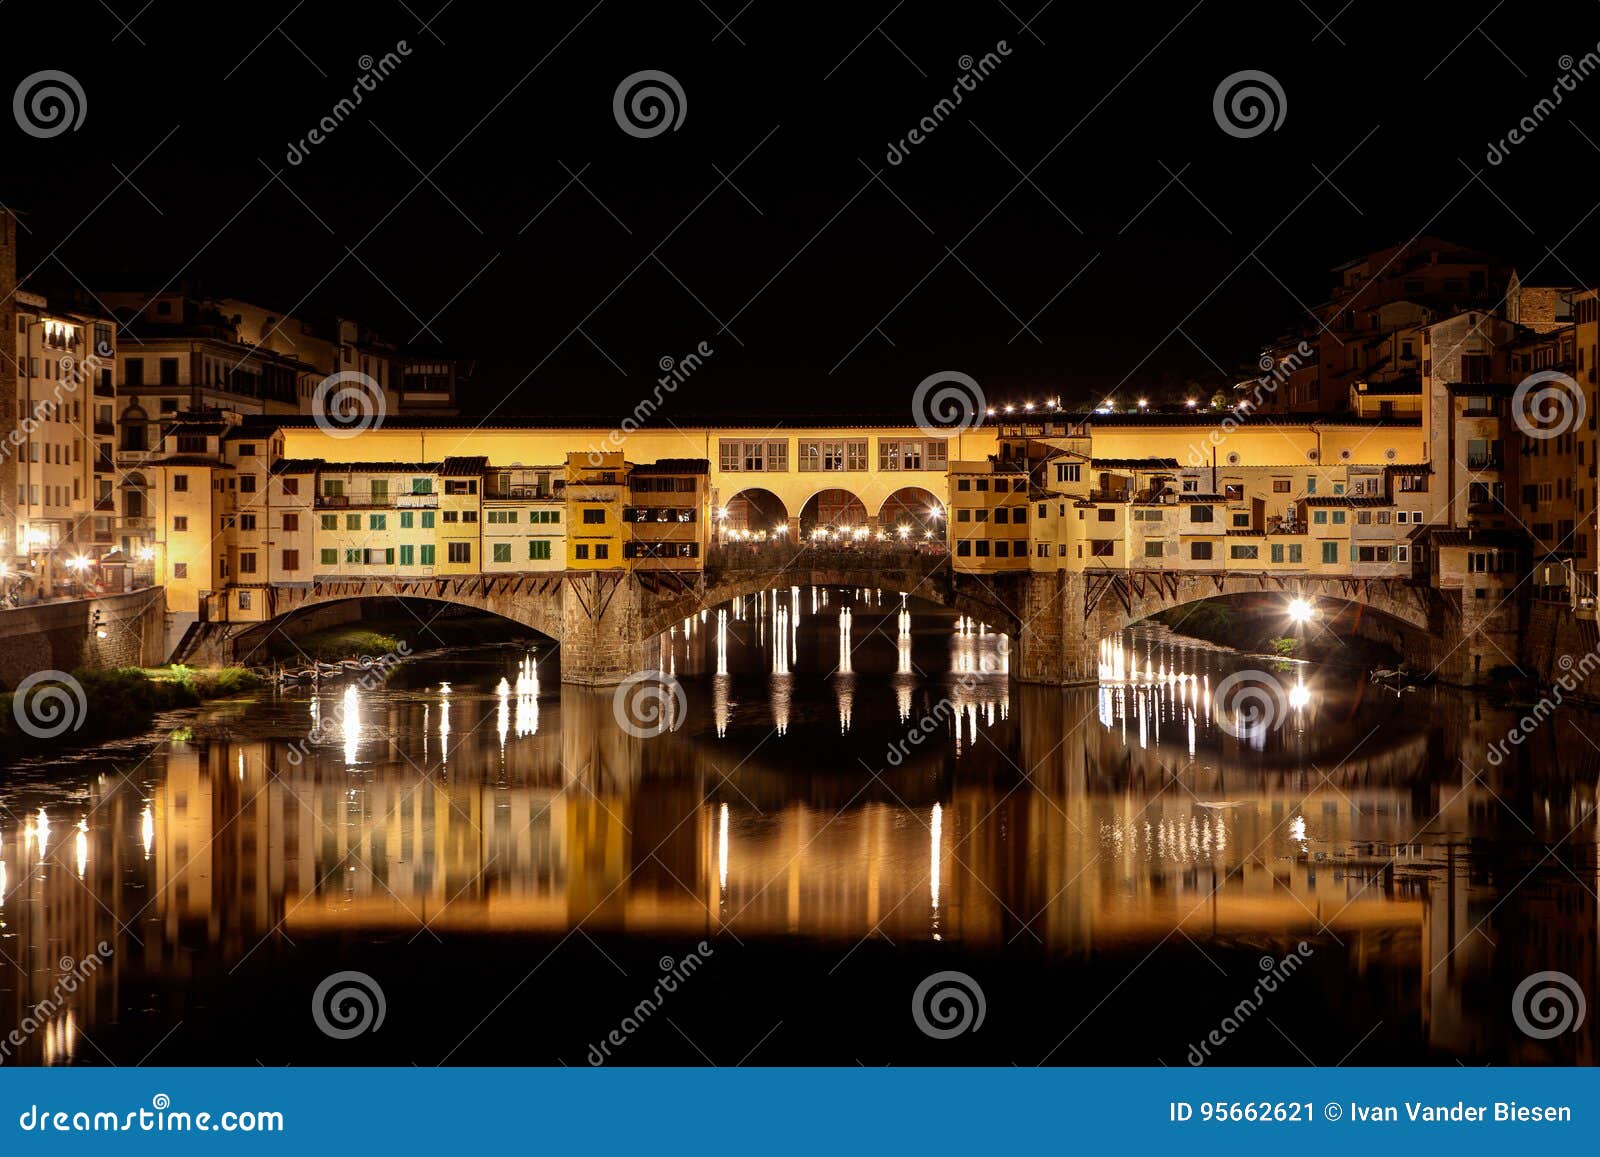 ponte vecchio, arno night, florence, firenze italy